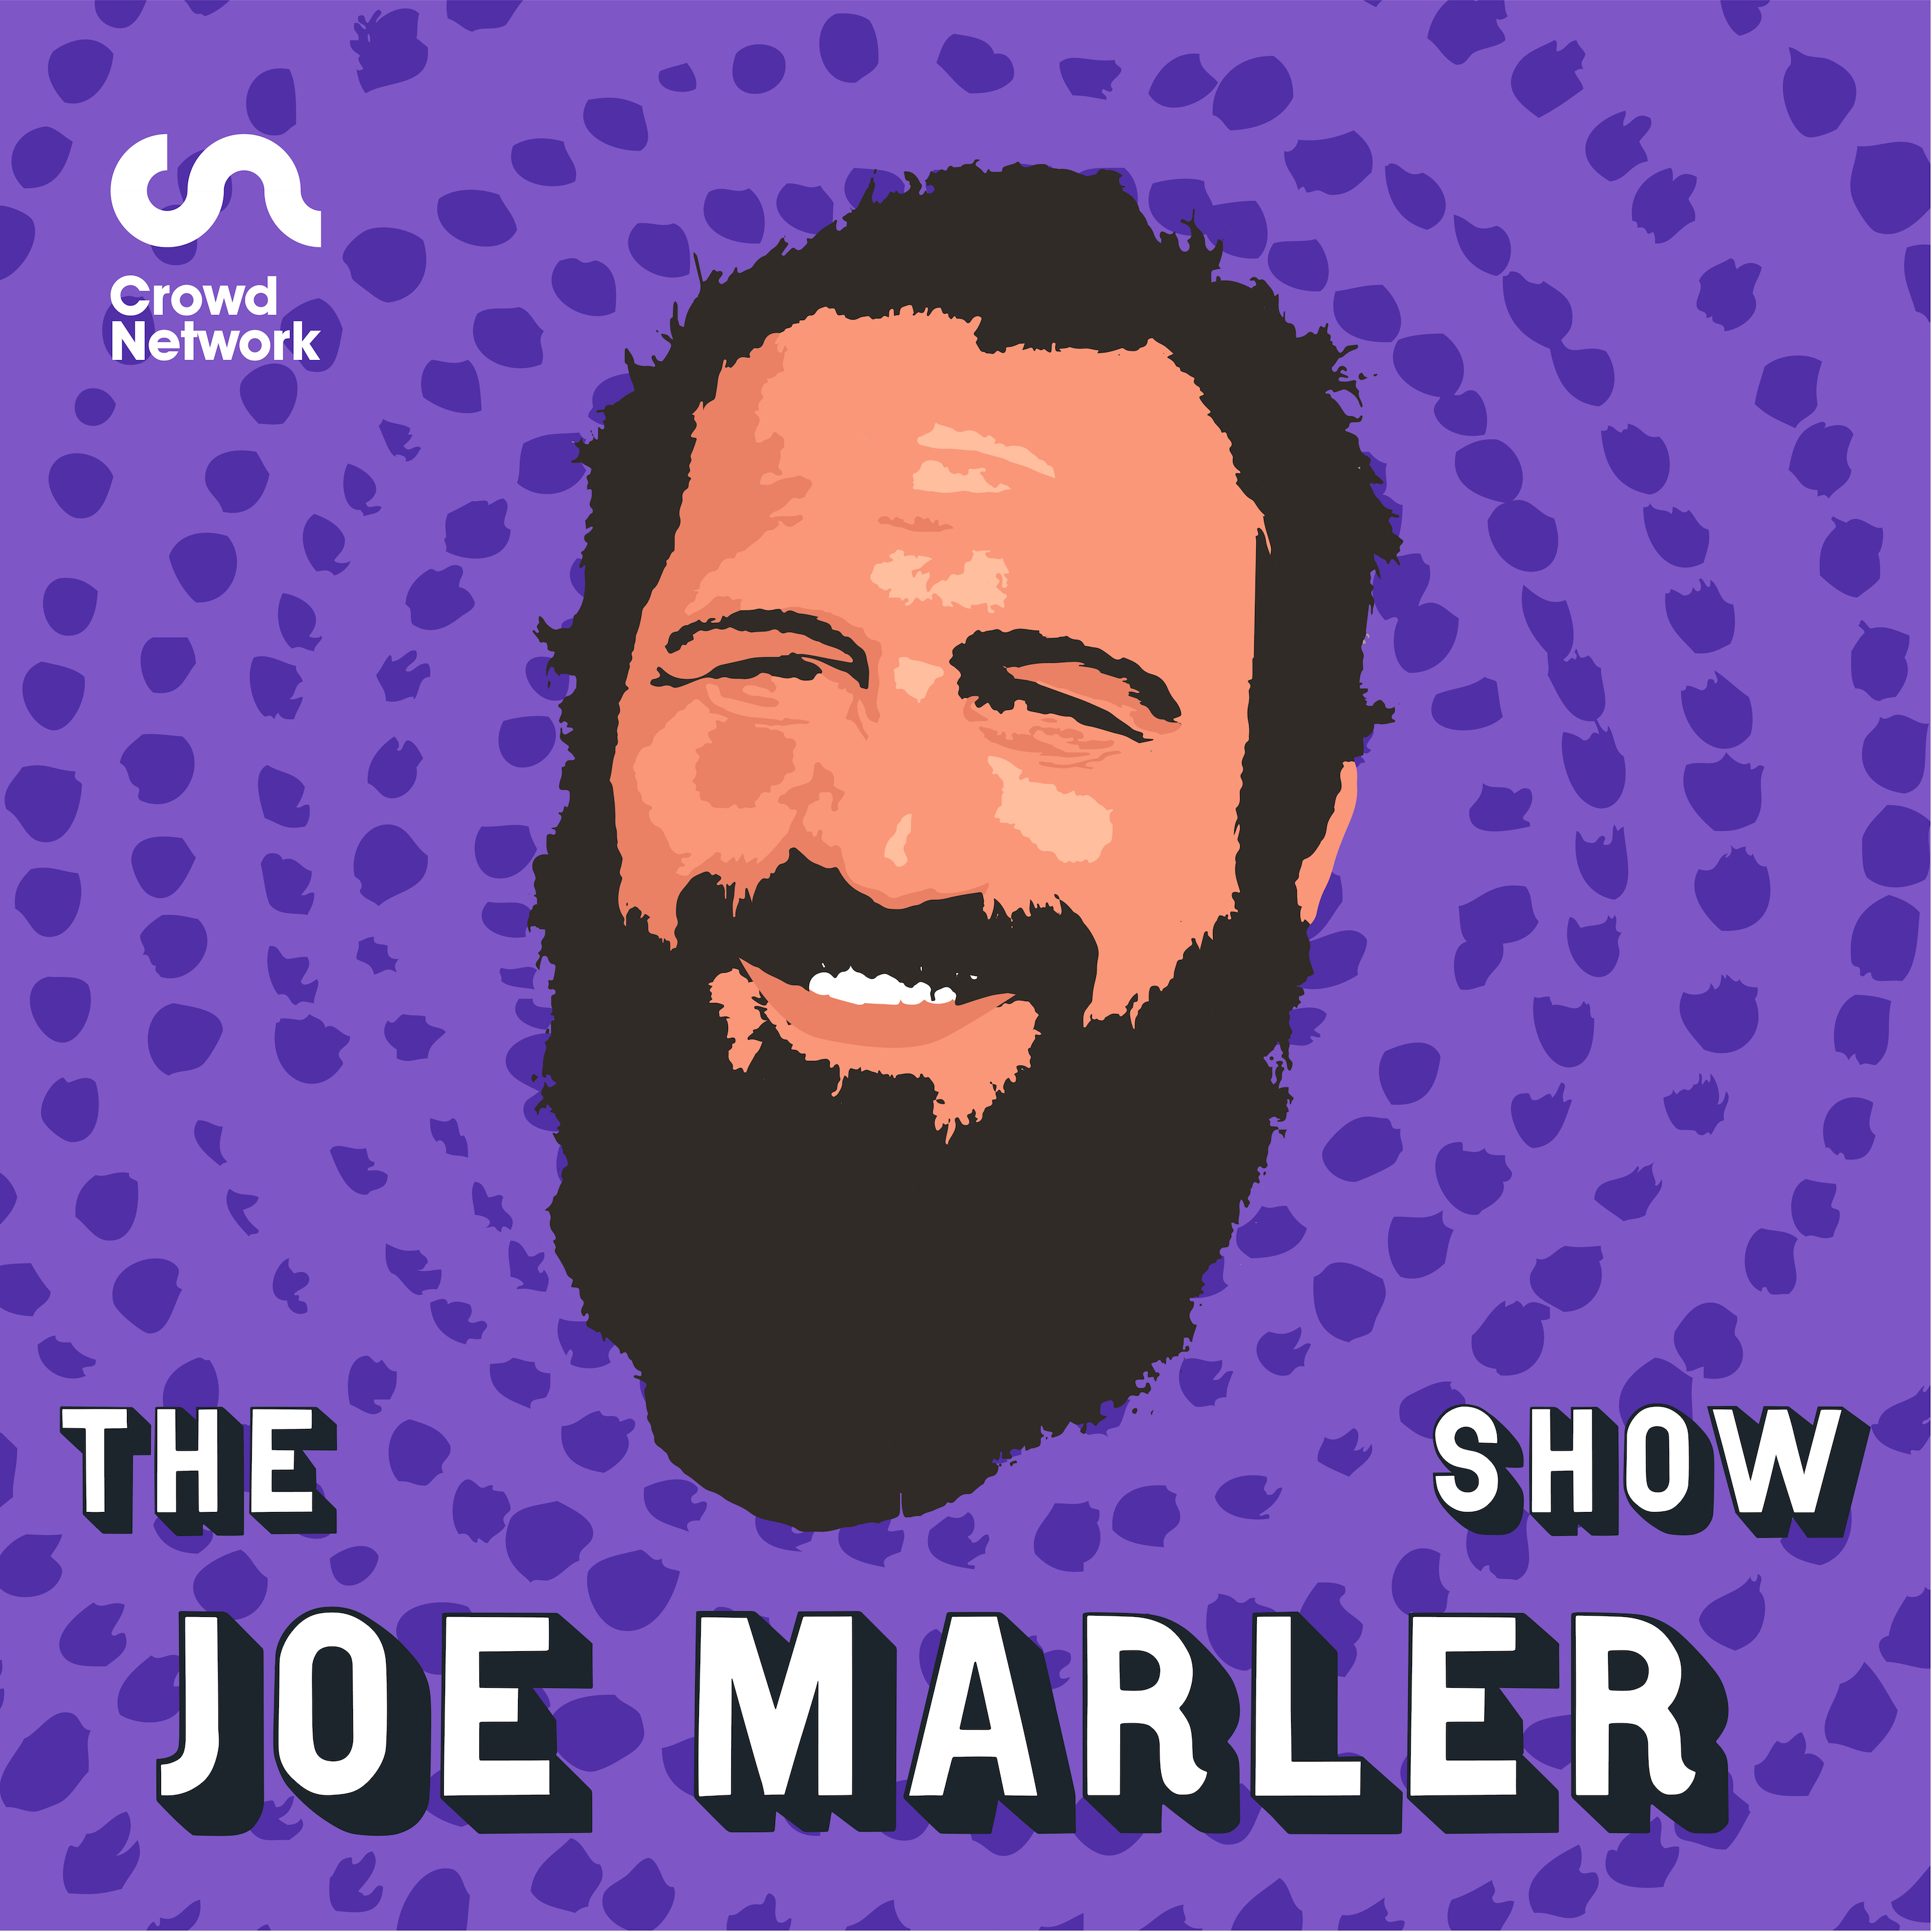 Joe Marler Show image